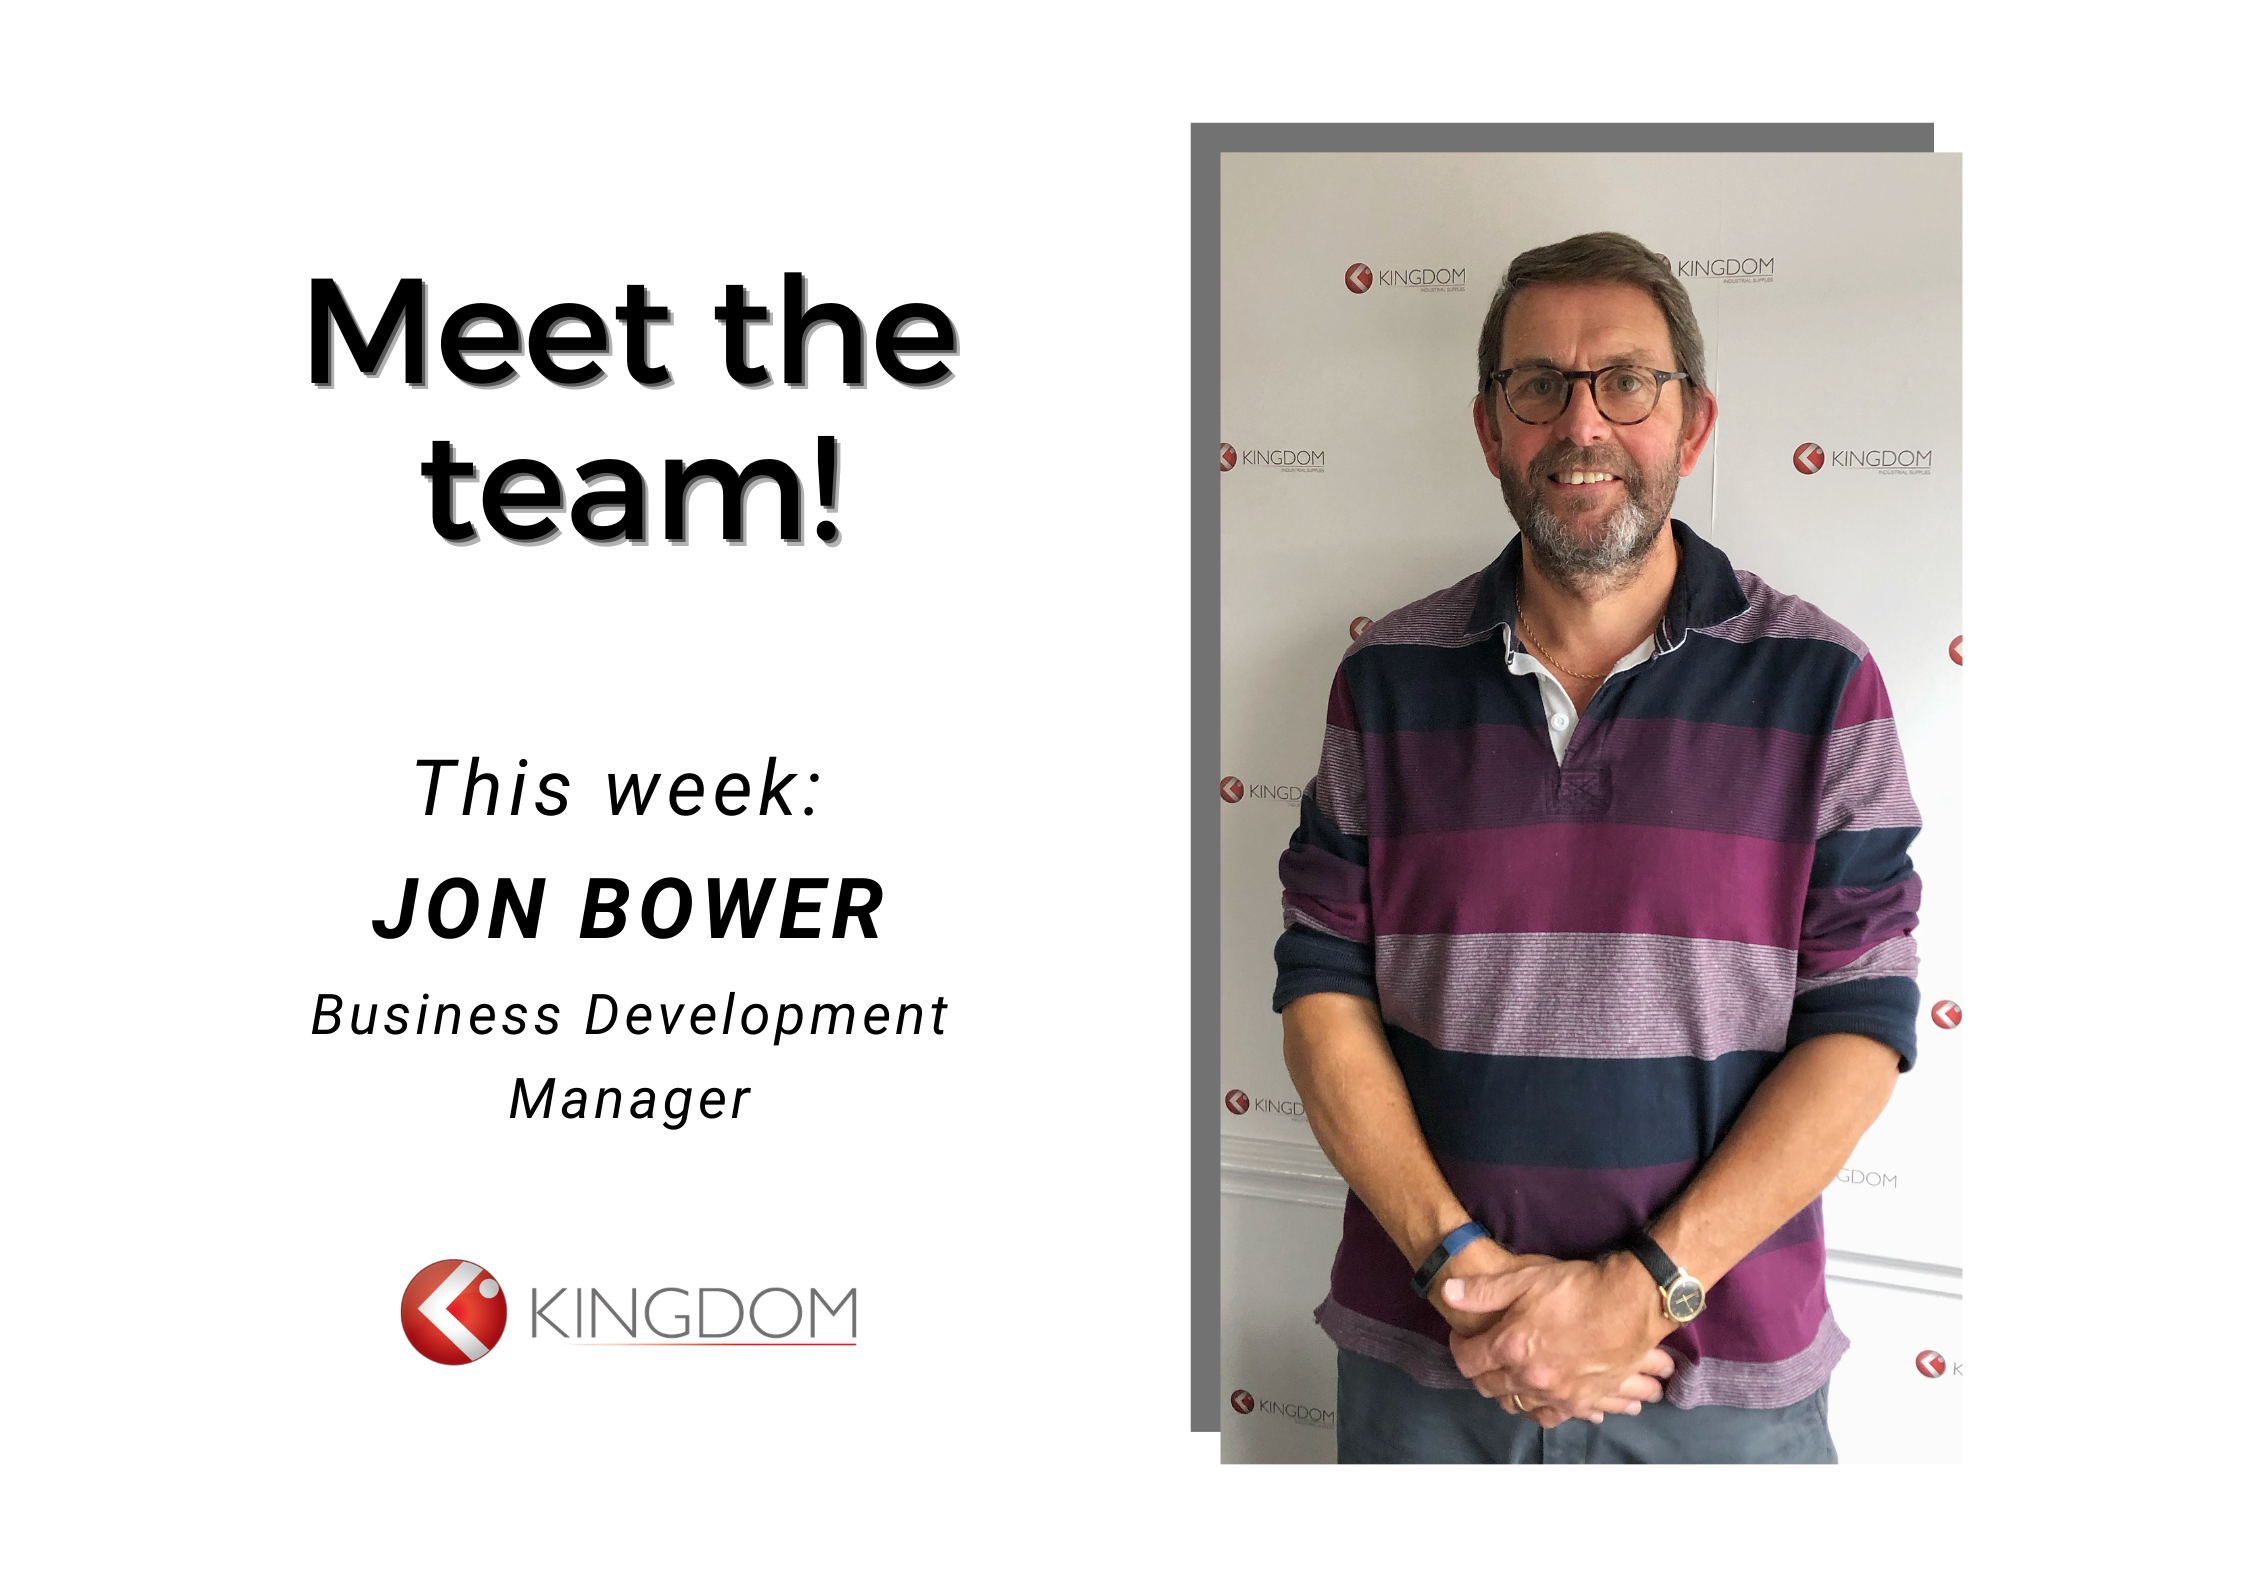 Image of Jon Bower Business Development Manager at Kingdom